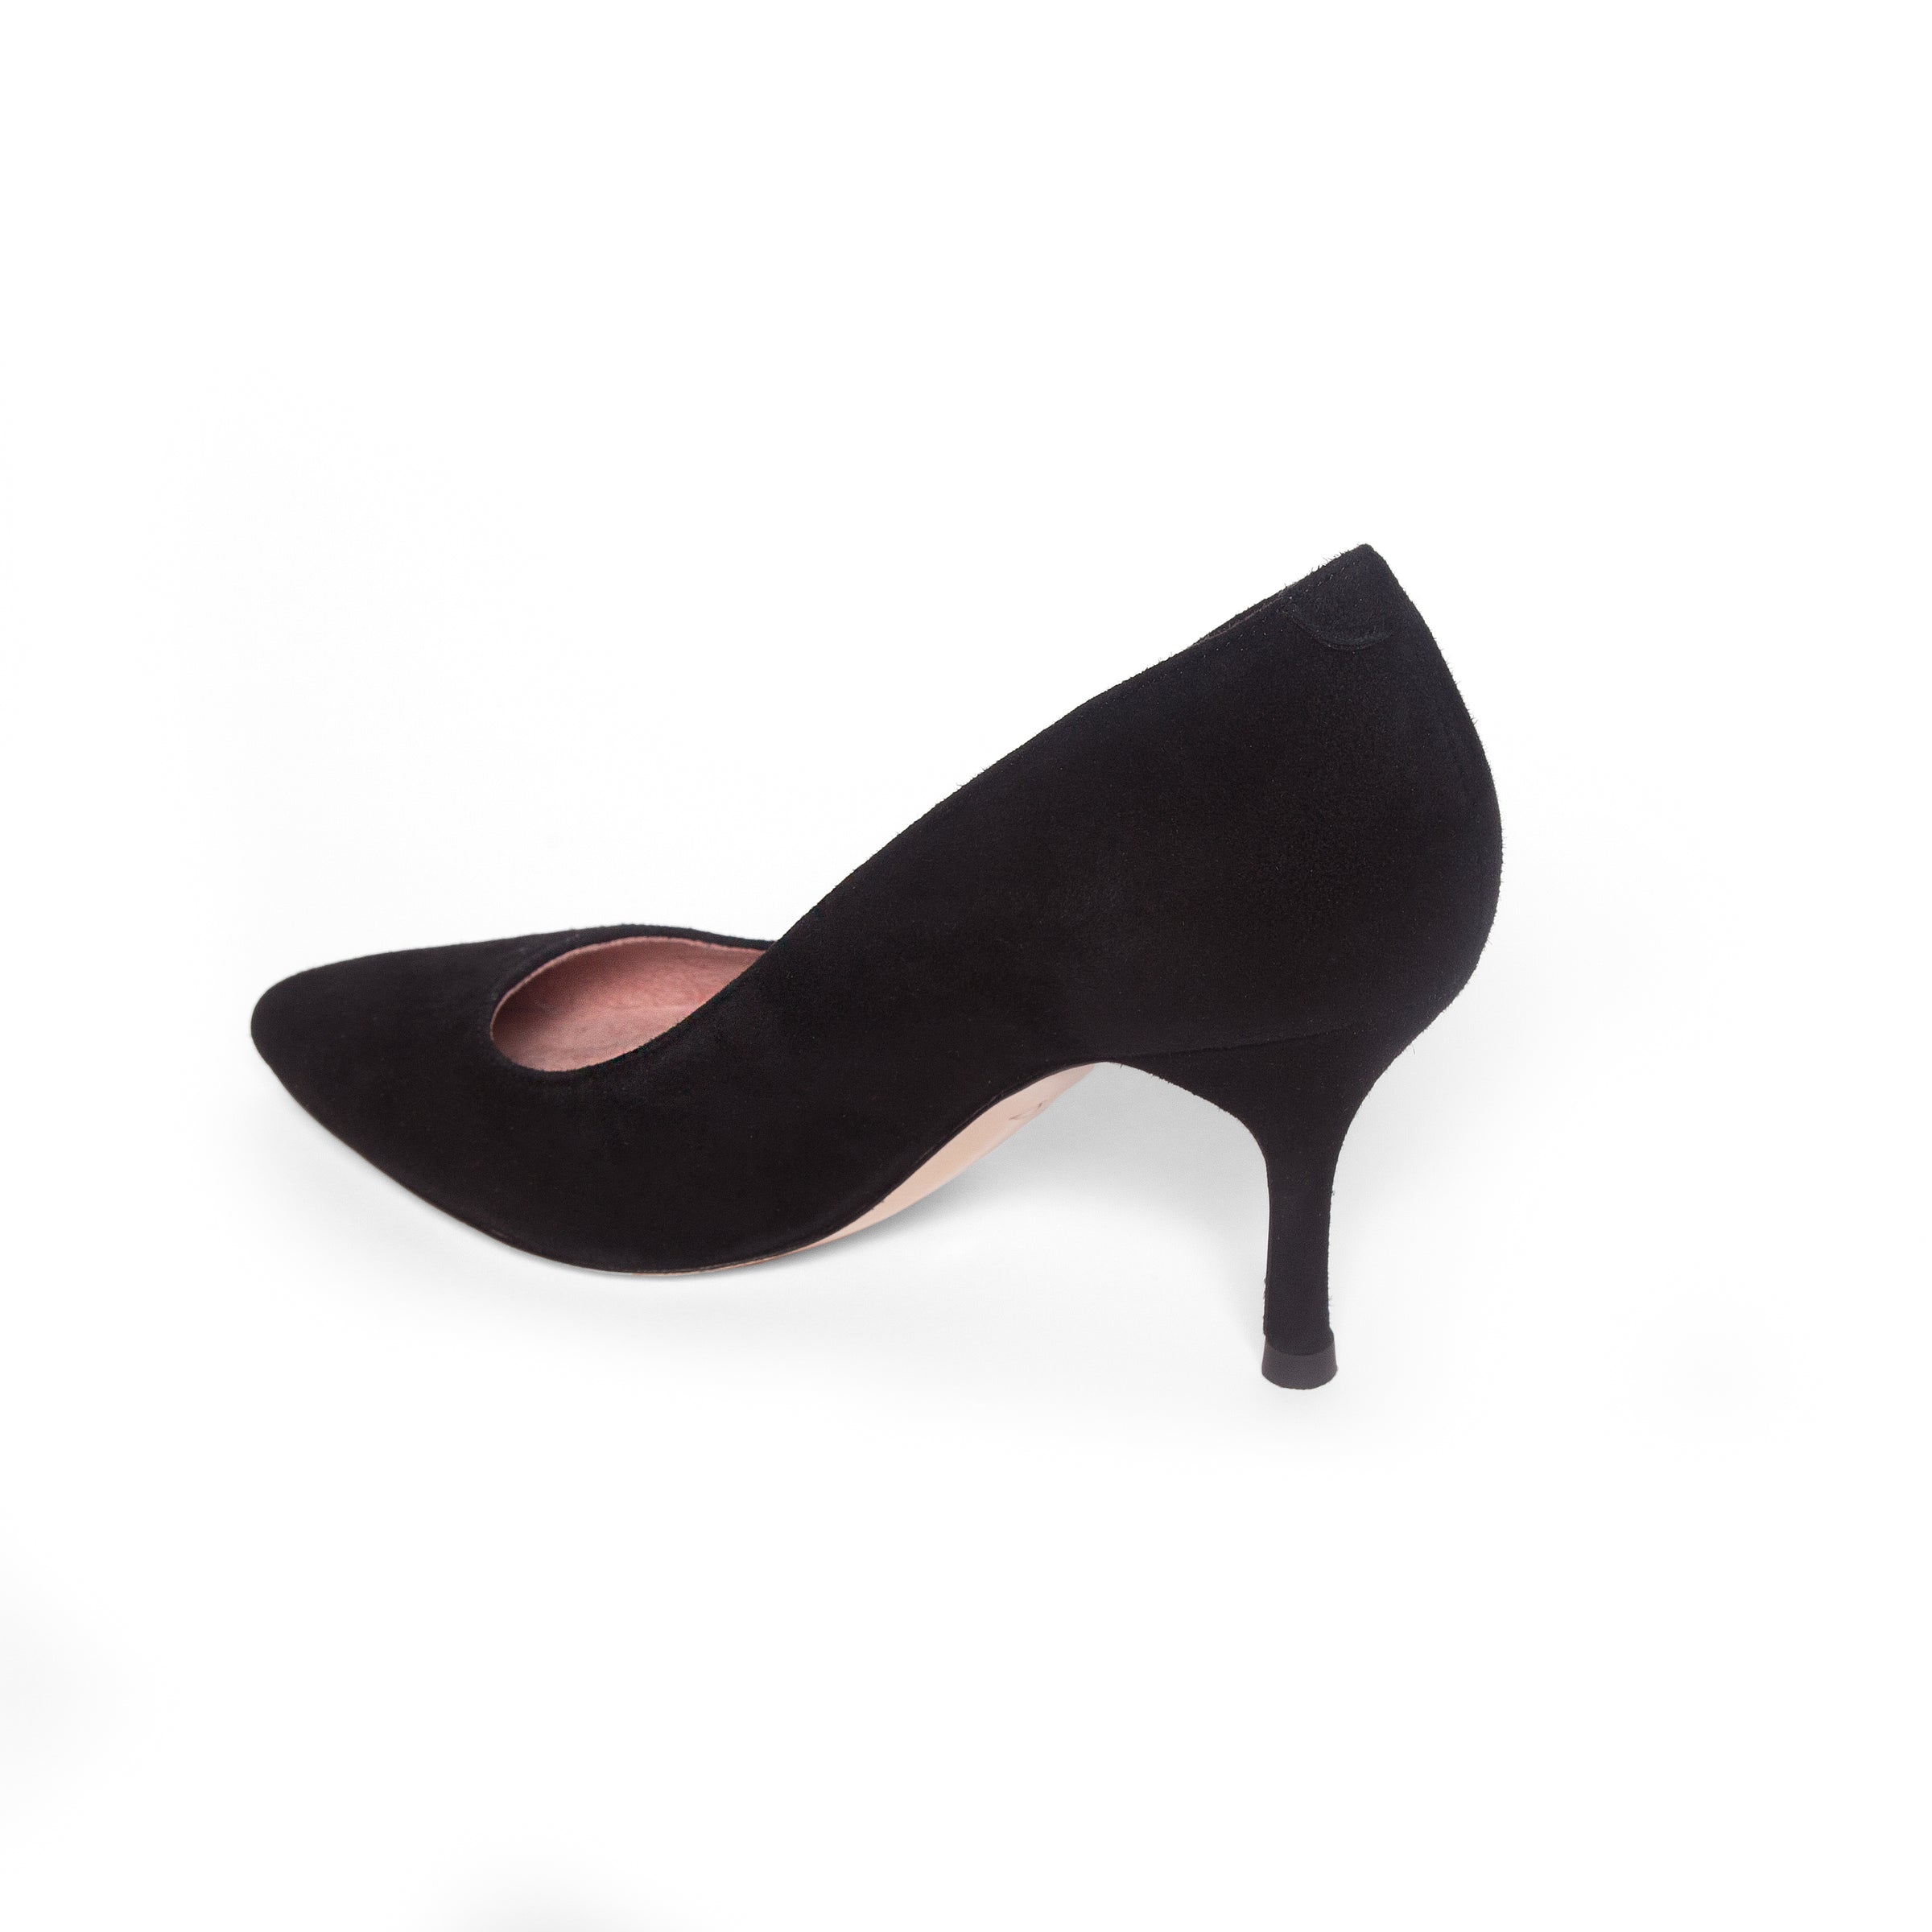 dr LIZA pump - BLACK | the most comfortable high heels | orthotic